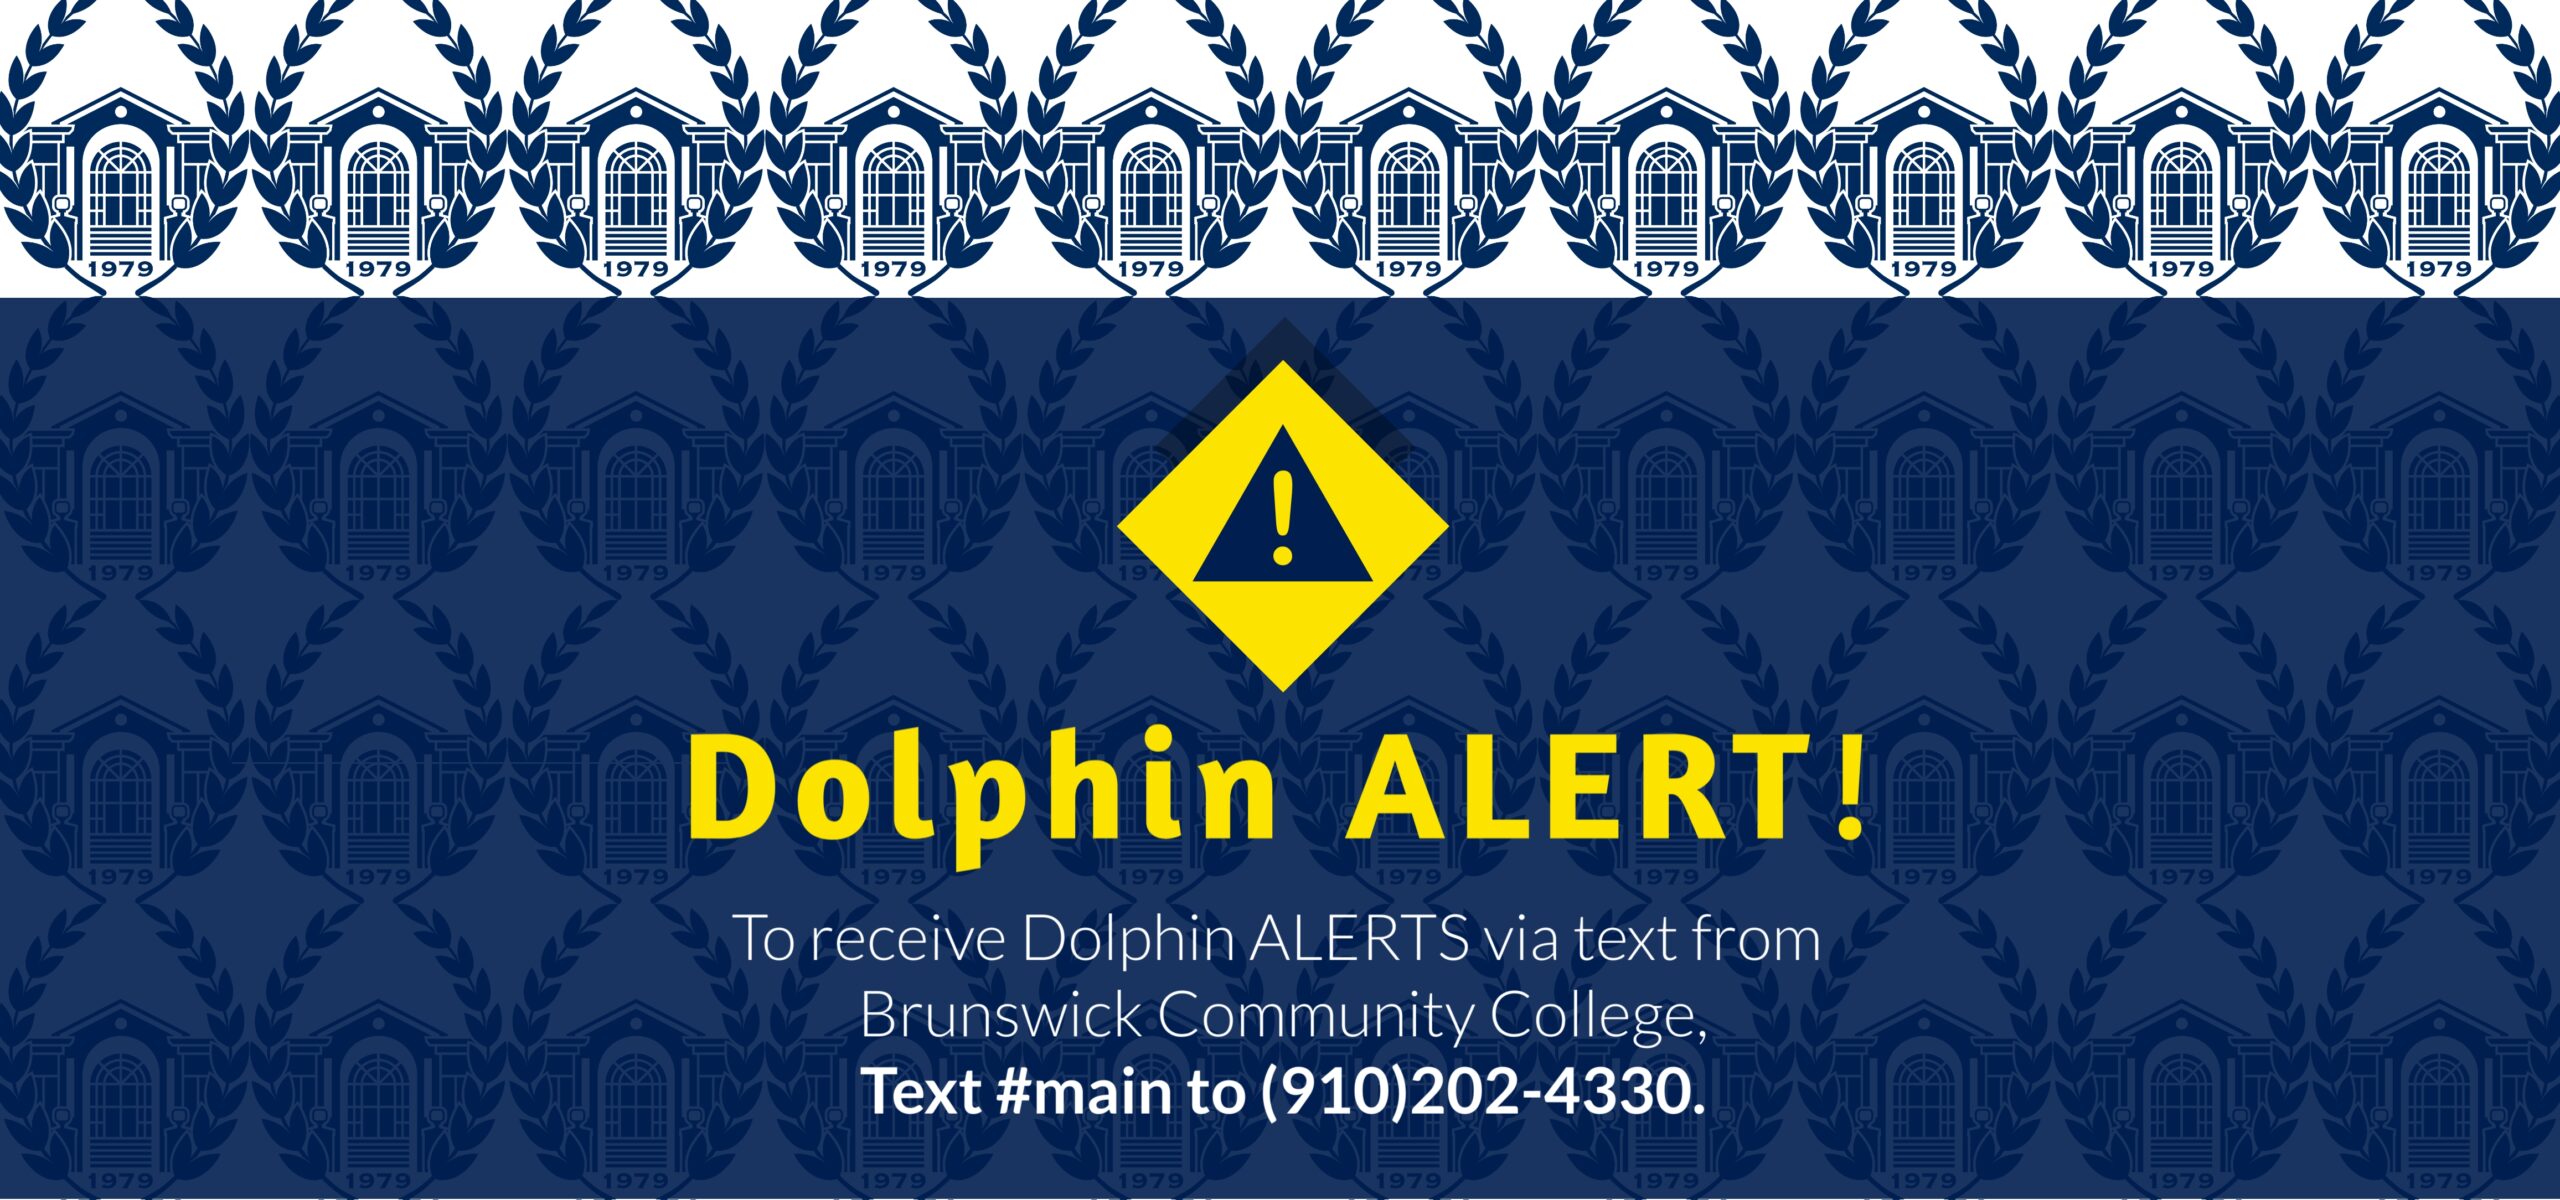 Dolphin Alert header